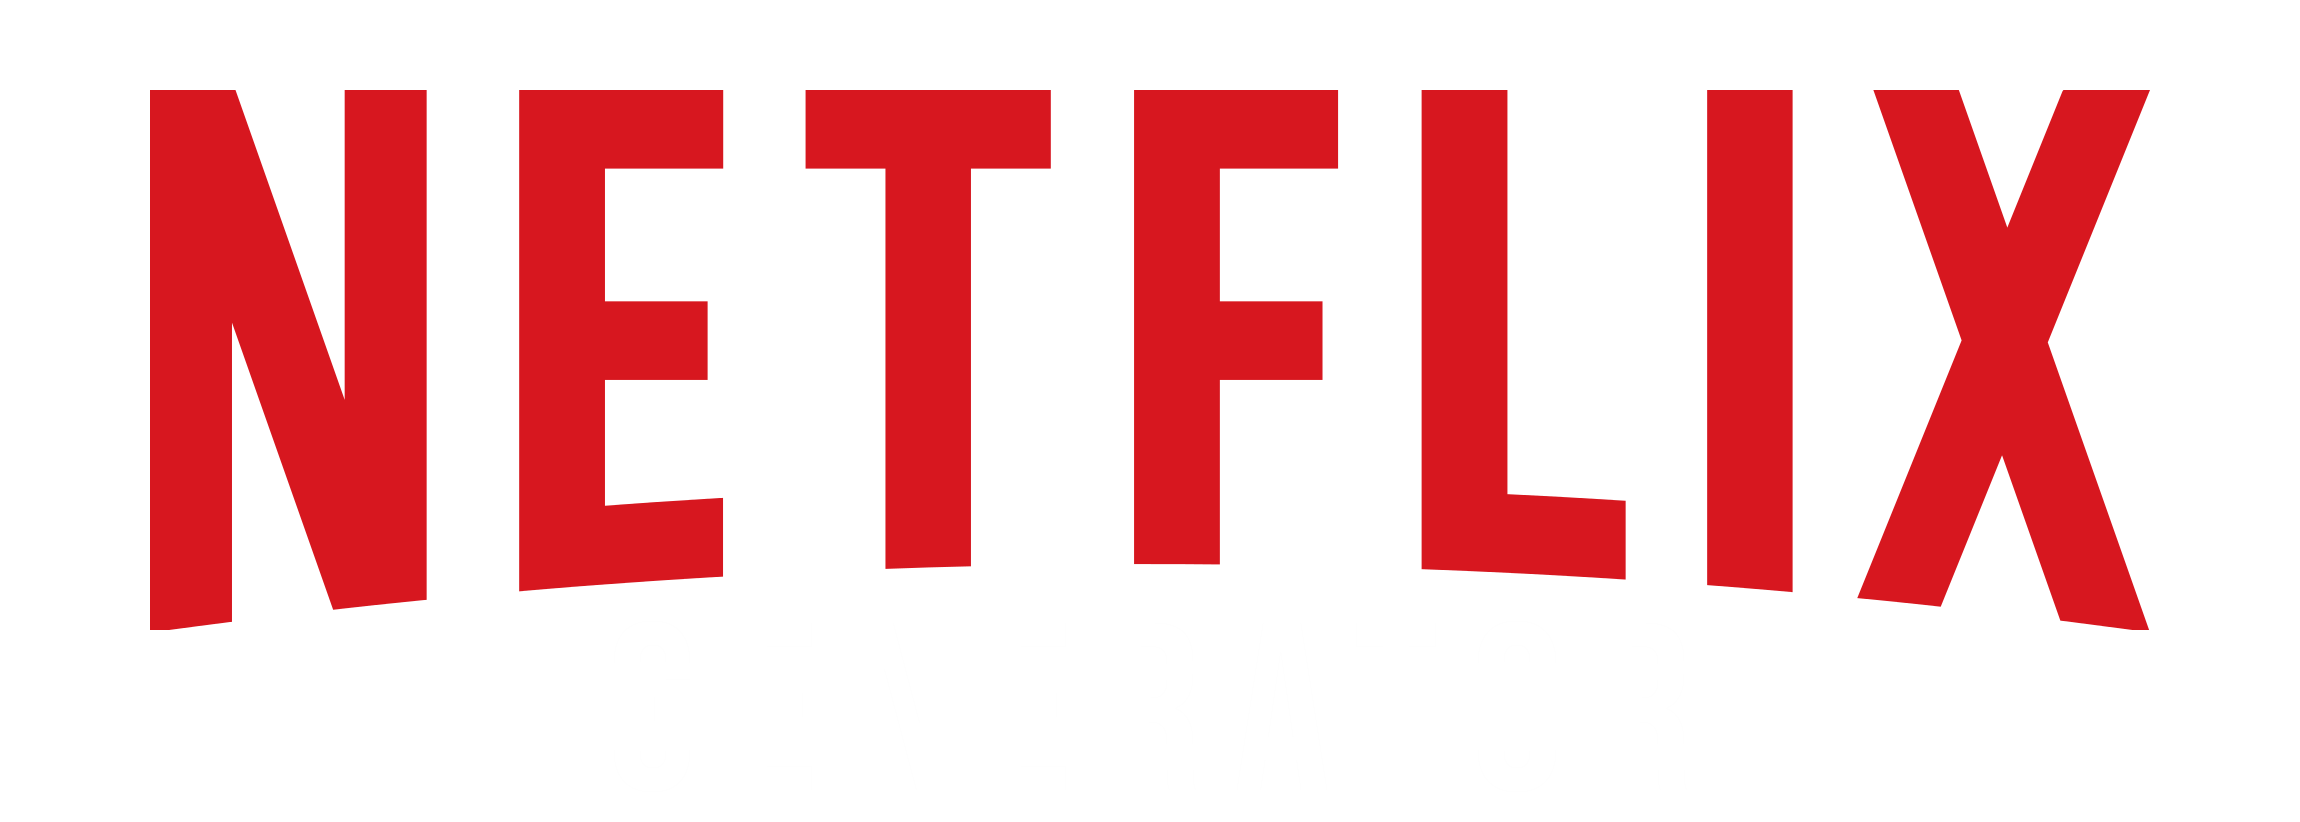 netflix logo generator